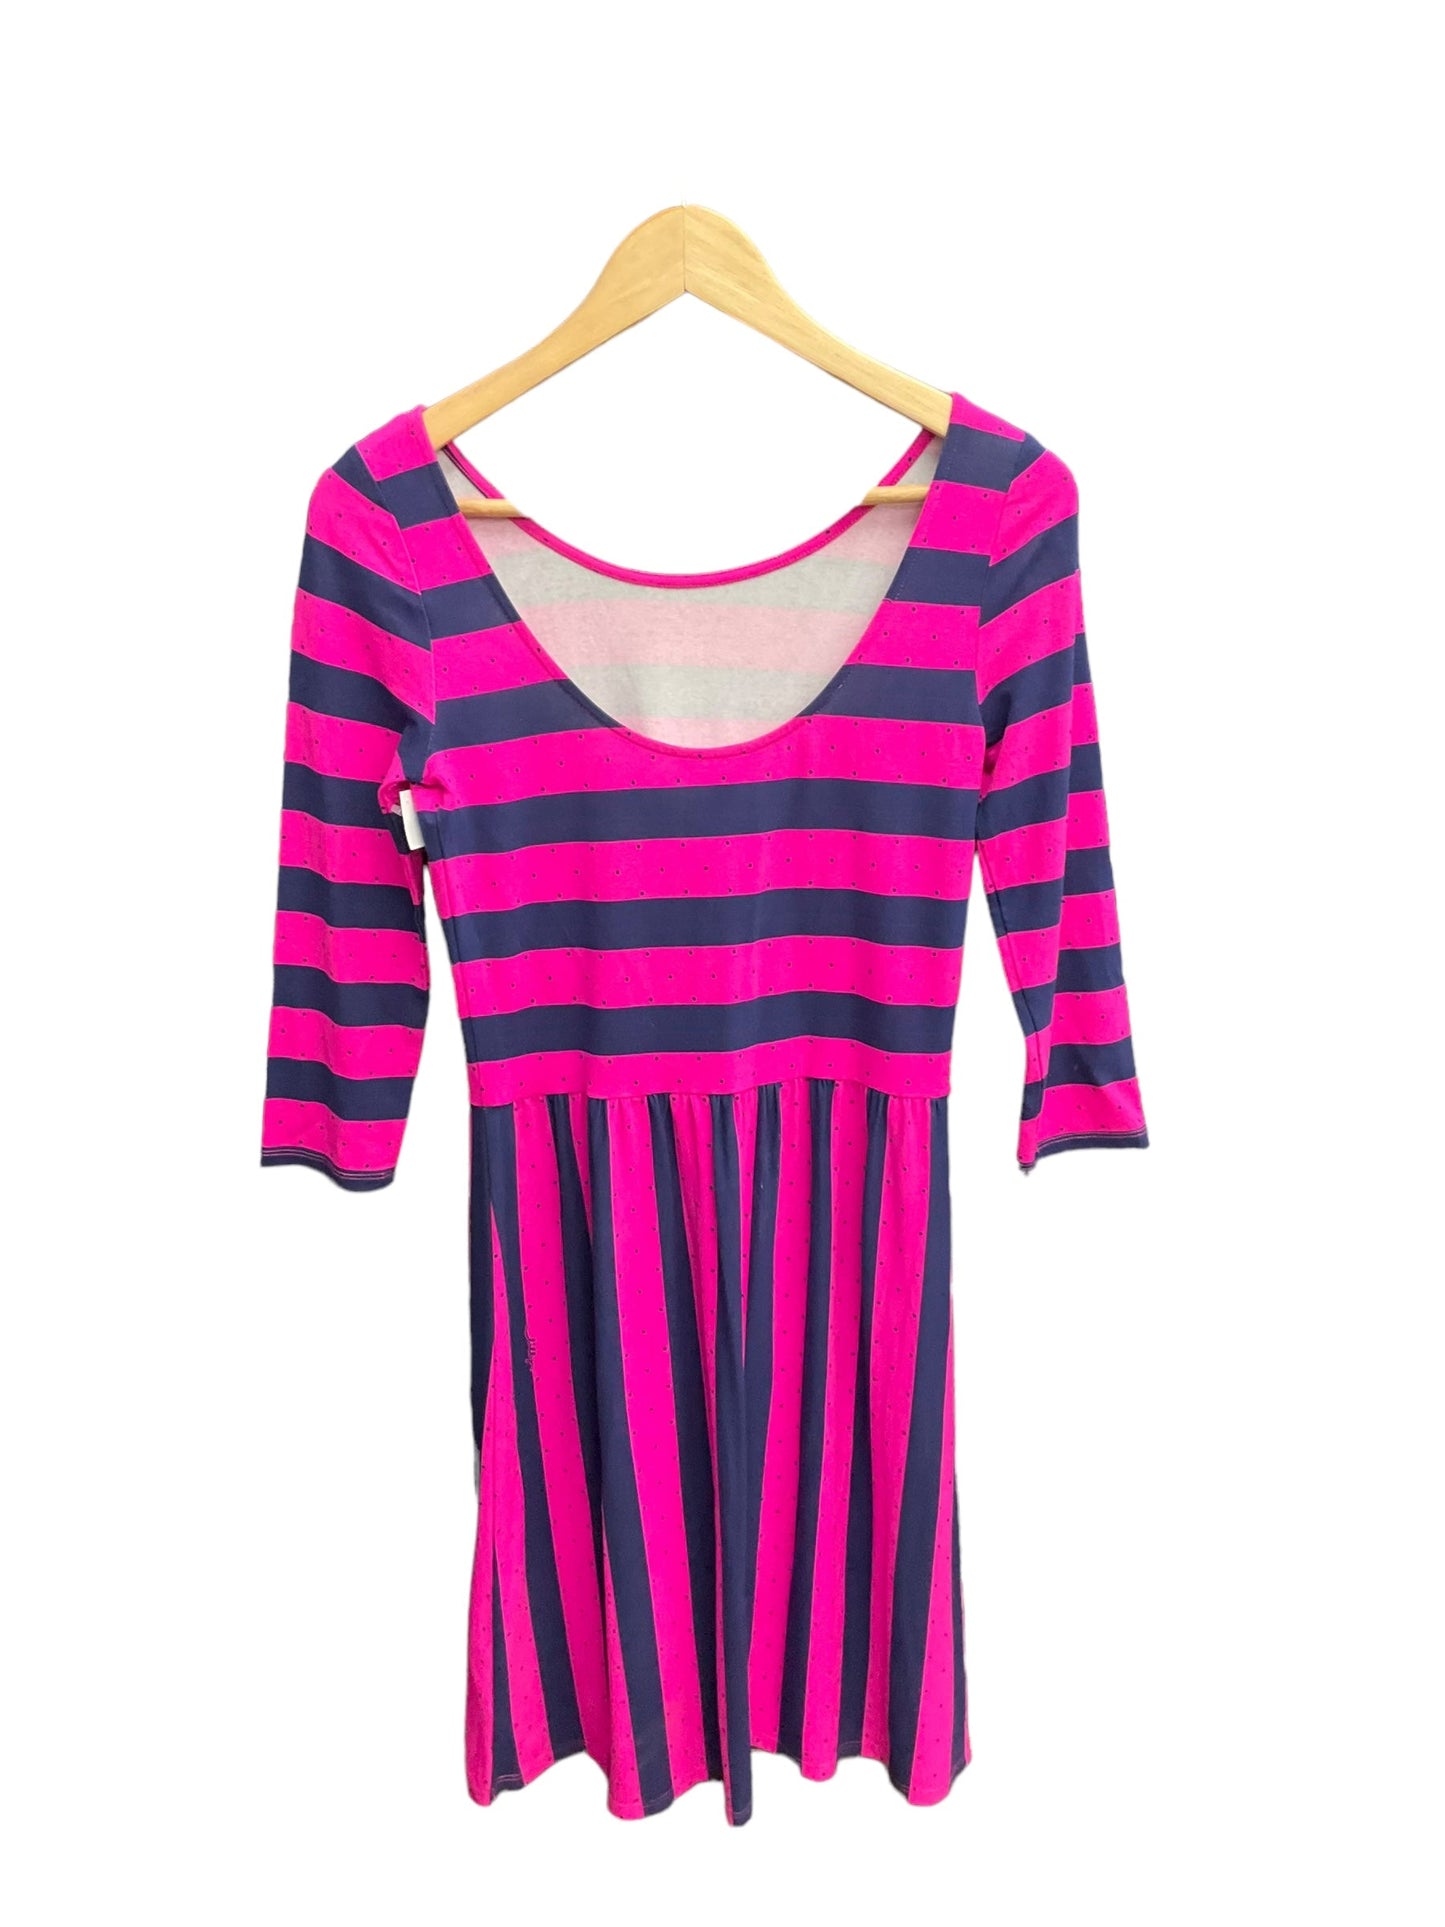 Striped Pattern Dress Casual Midi Lilly Pulitzer, Size S